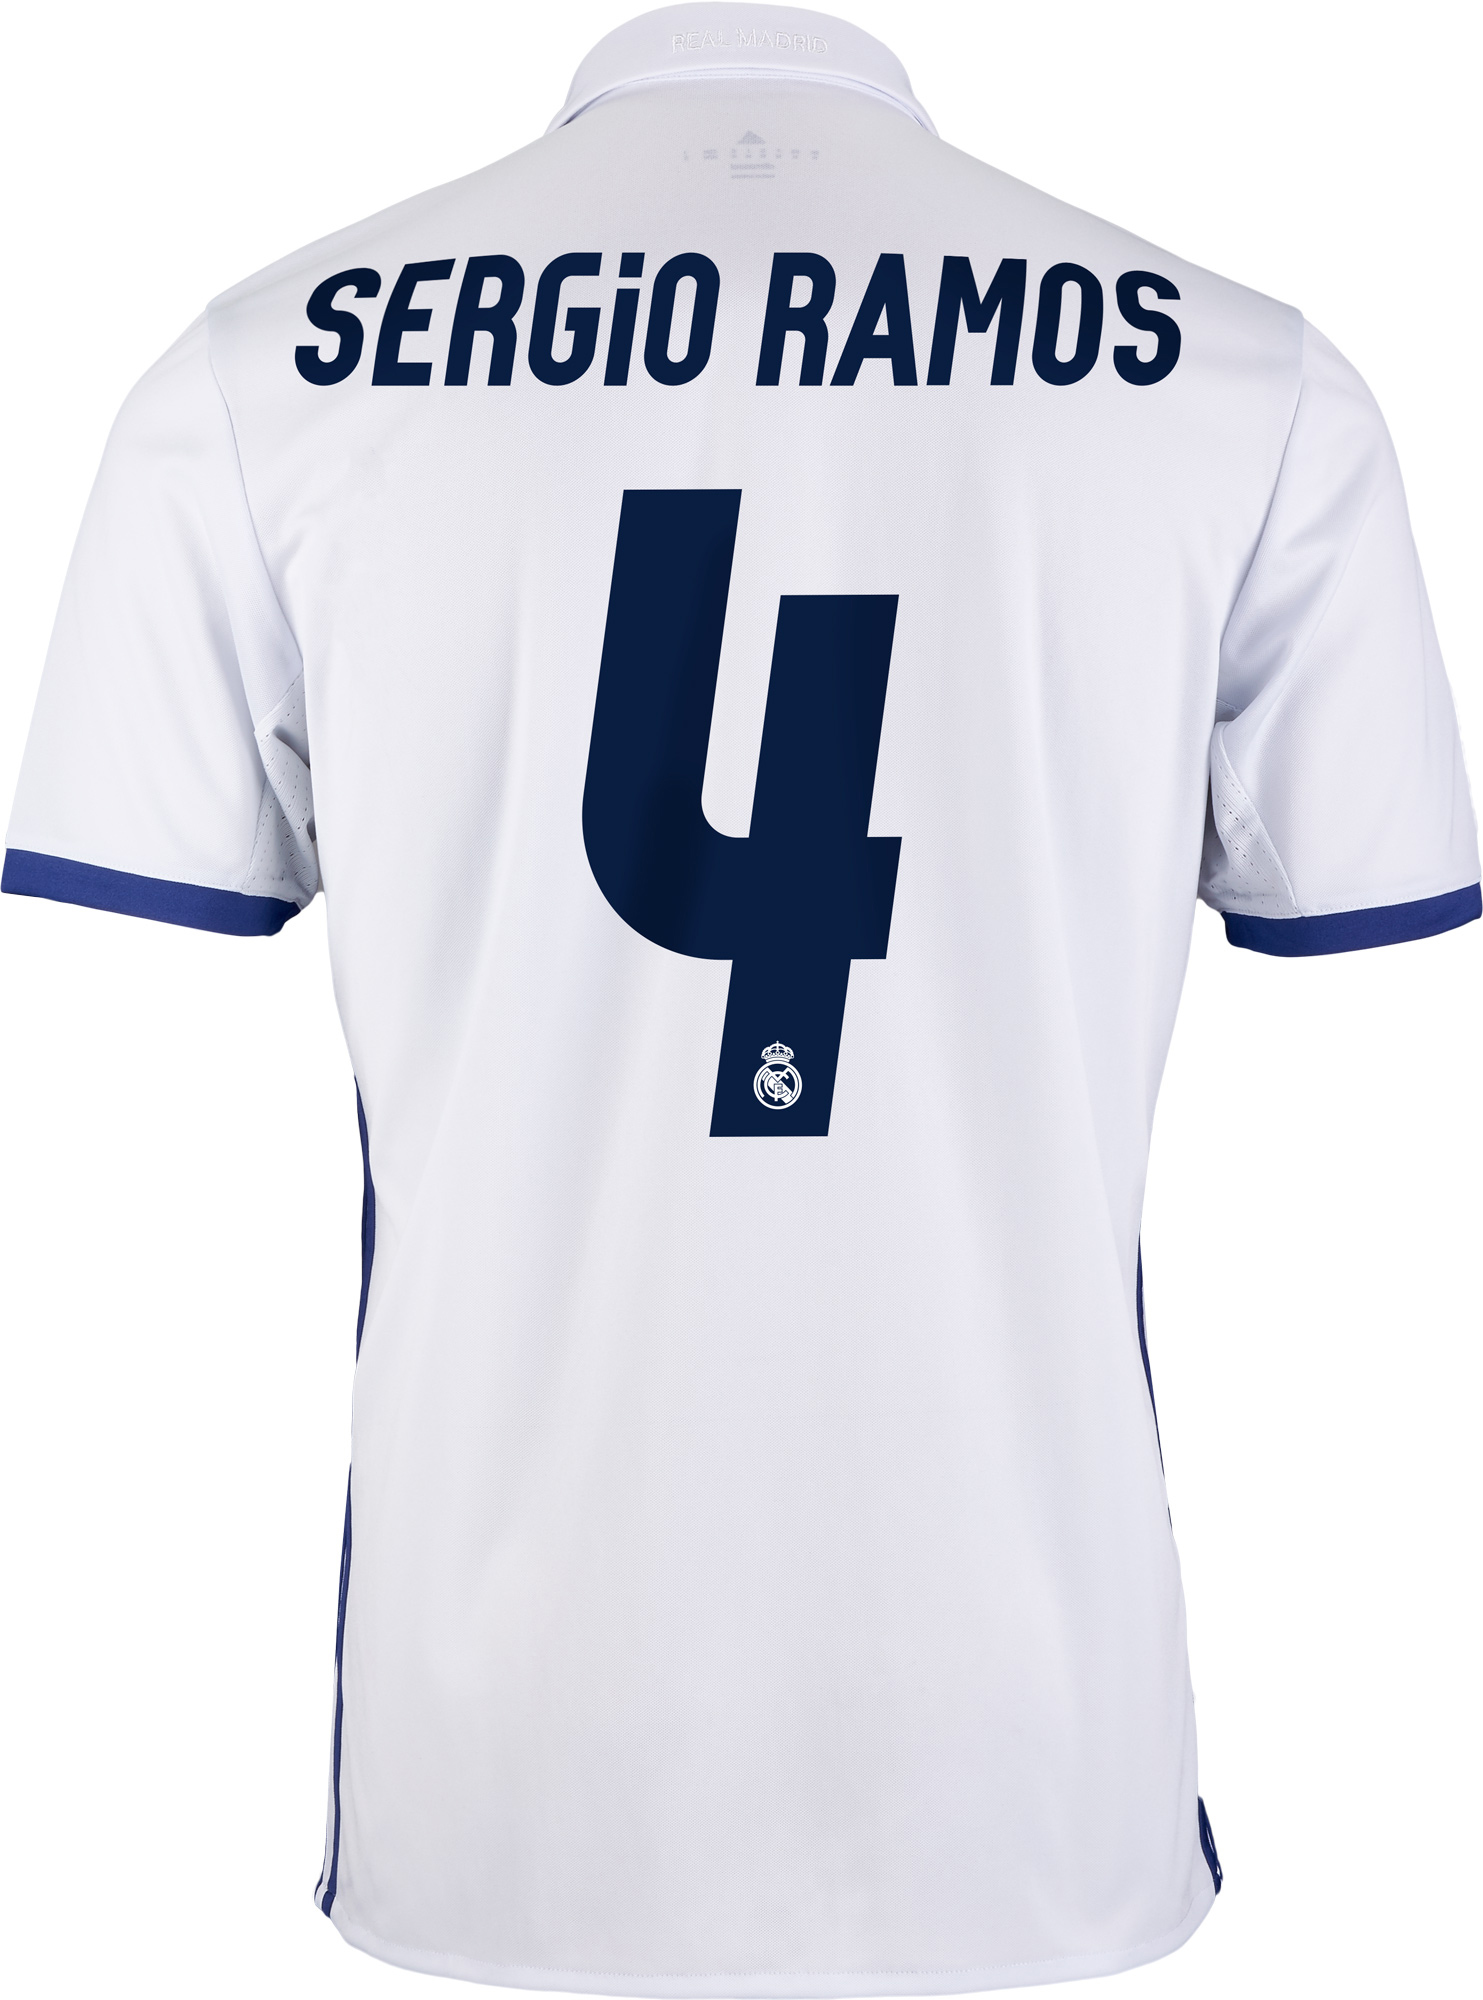 Sergio Ramos Real Madrid Jersey  201617 Real Madrid Jerseys